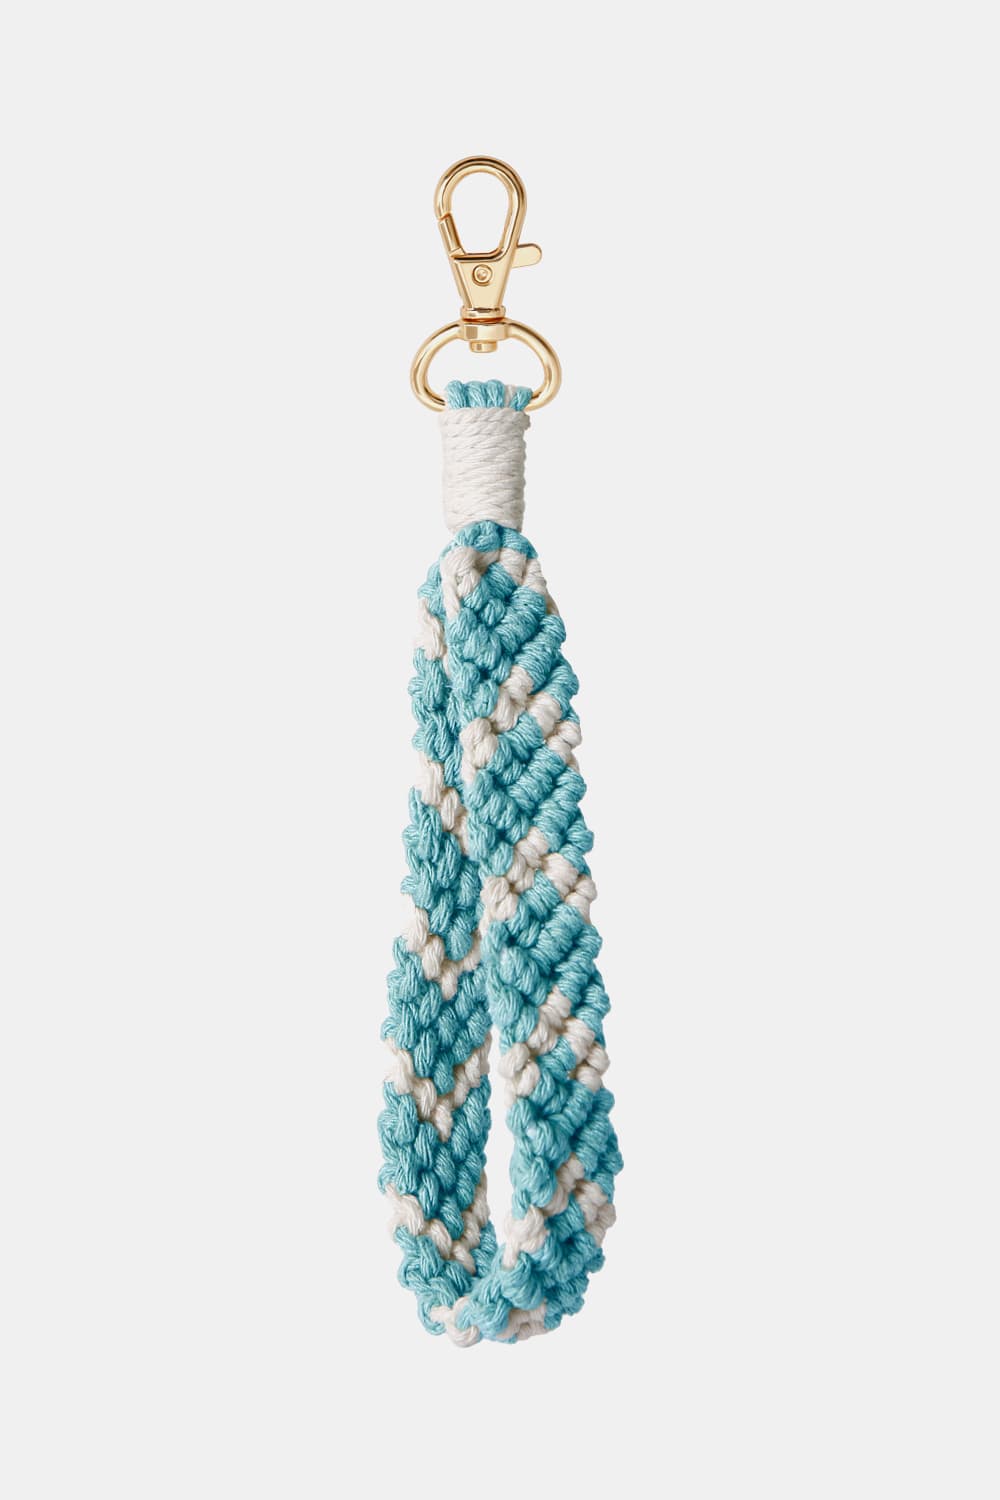 Trendsi Cupid Beauty Supplies Tiffany Blue / One Size Keychains Macrame Wristlet Key Chain